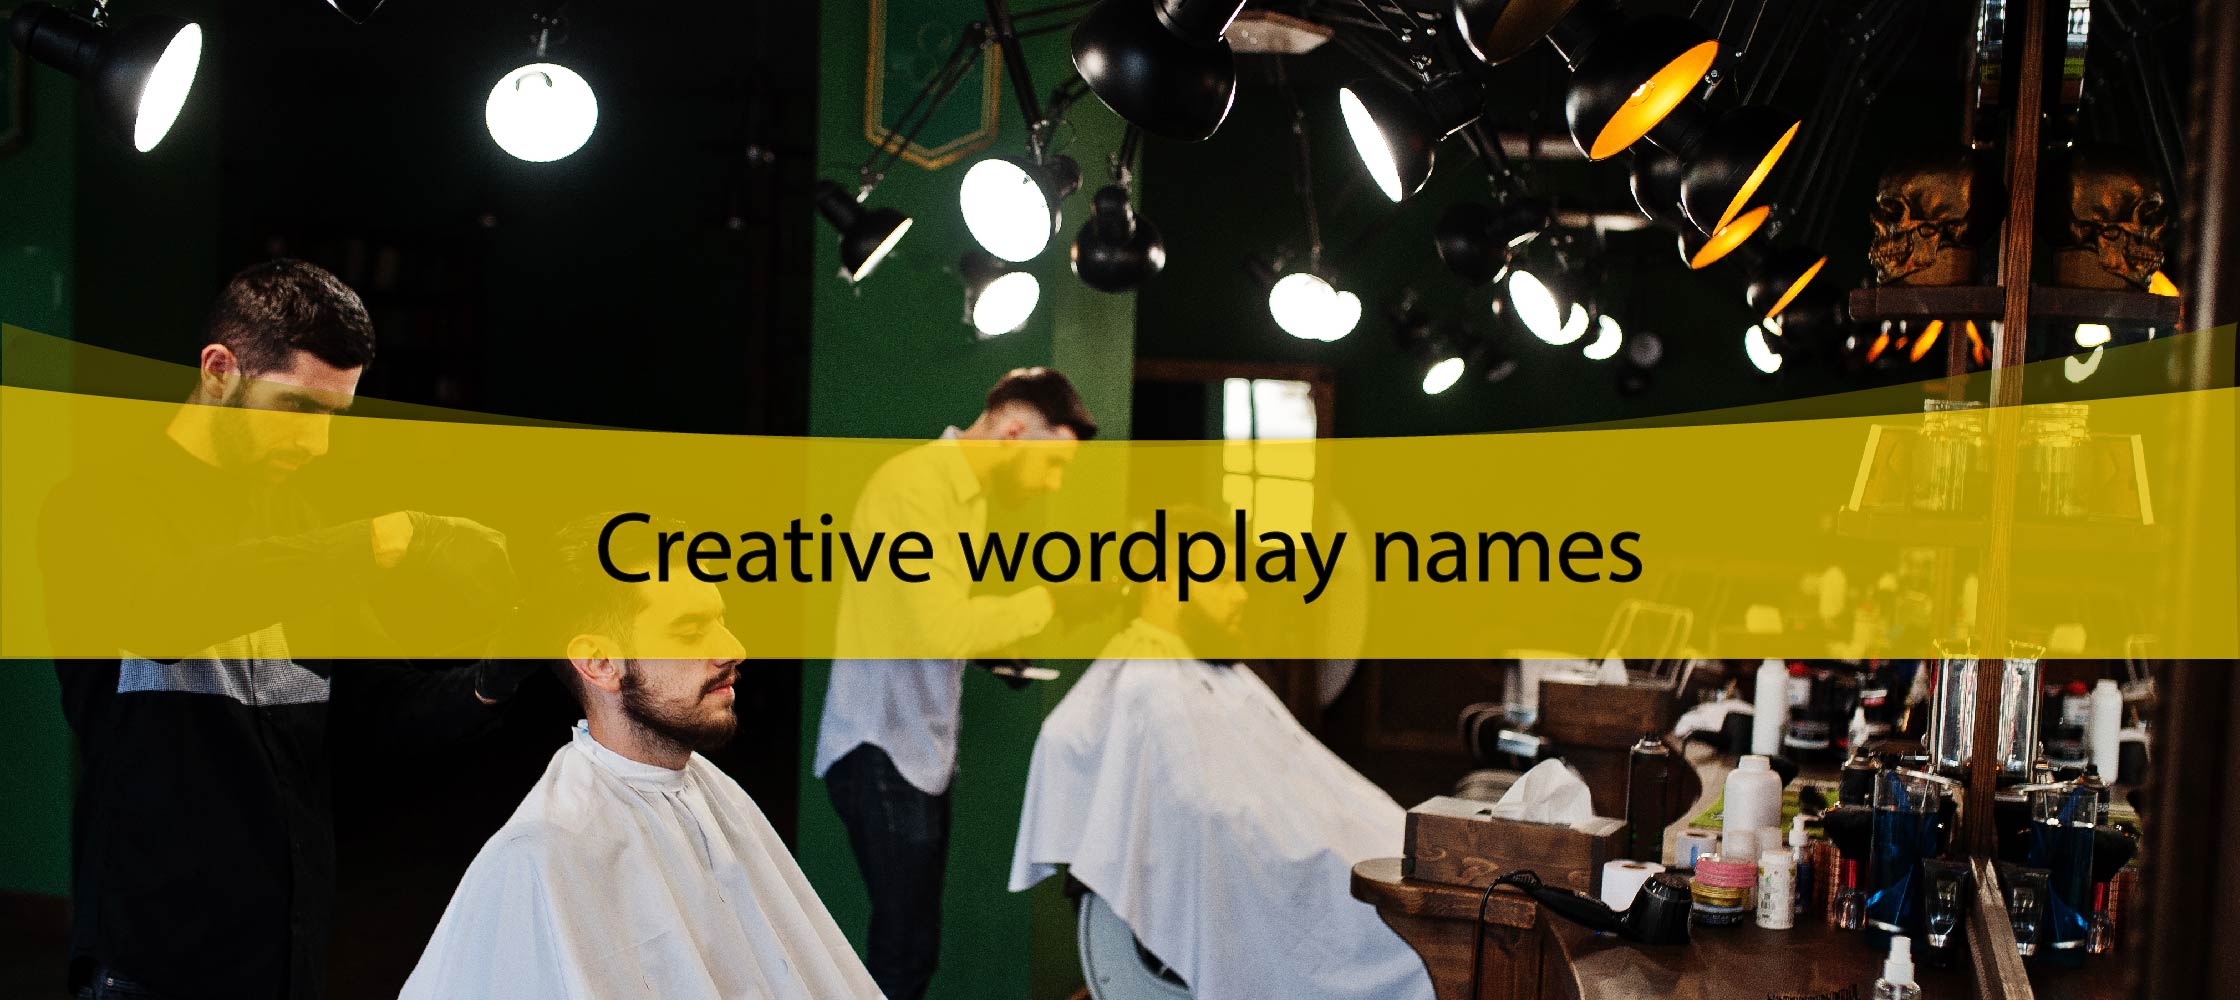 Creative wordplay names